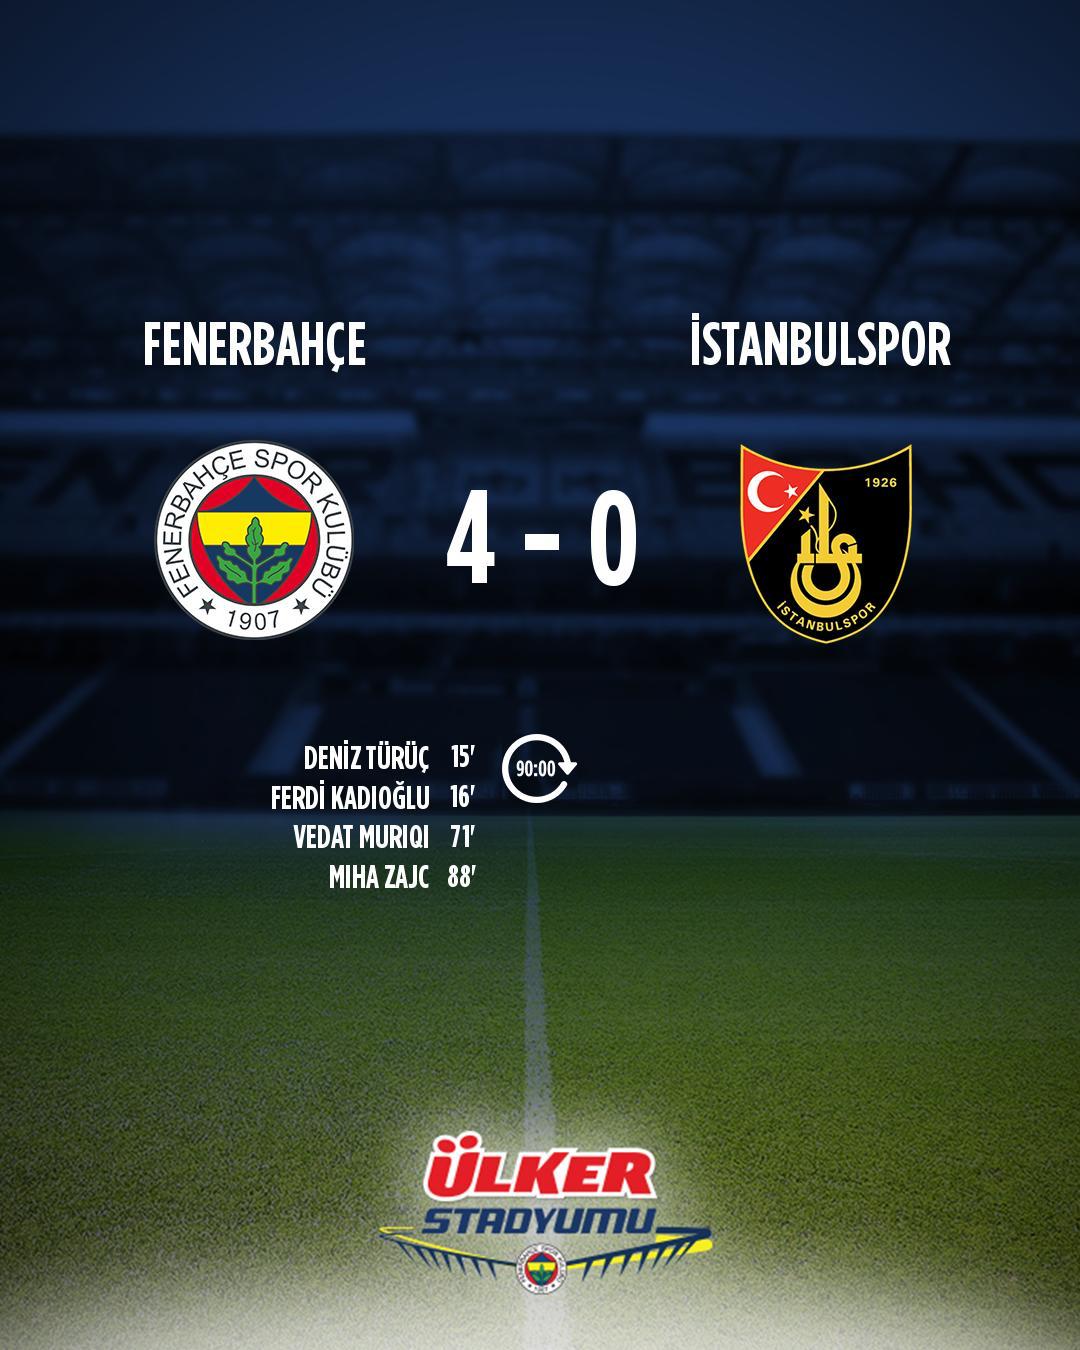 Fenerbahçe vs Trabzonspor: A Rivalry That Ignites Passion